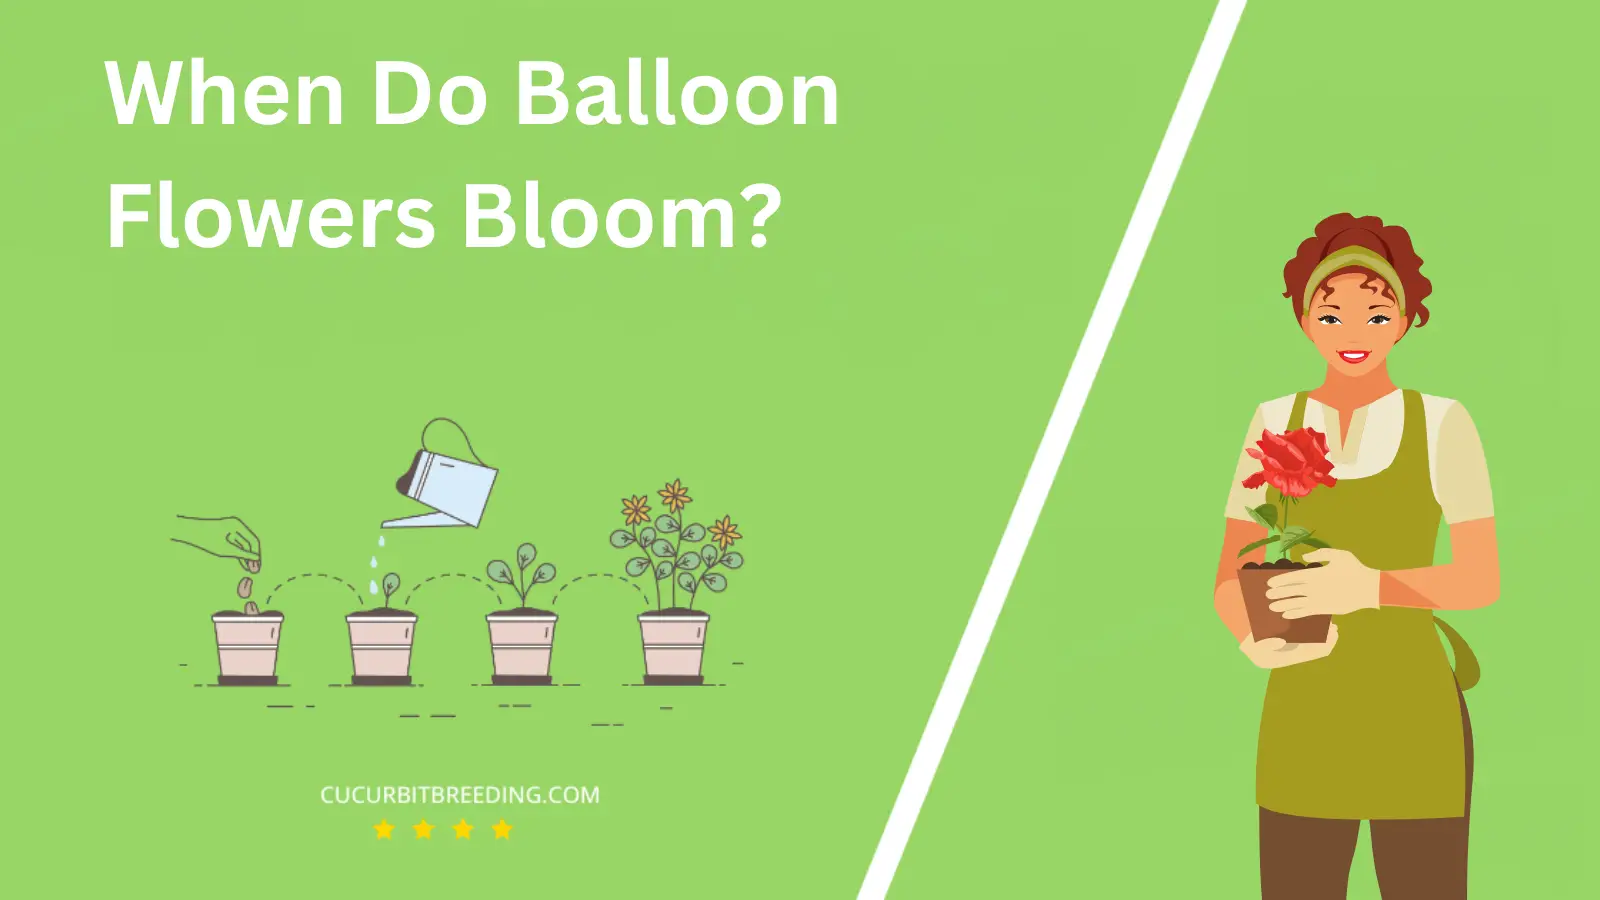 When Do Balloon Flowers Bloom?